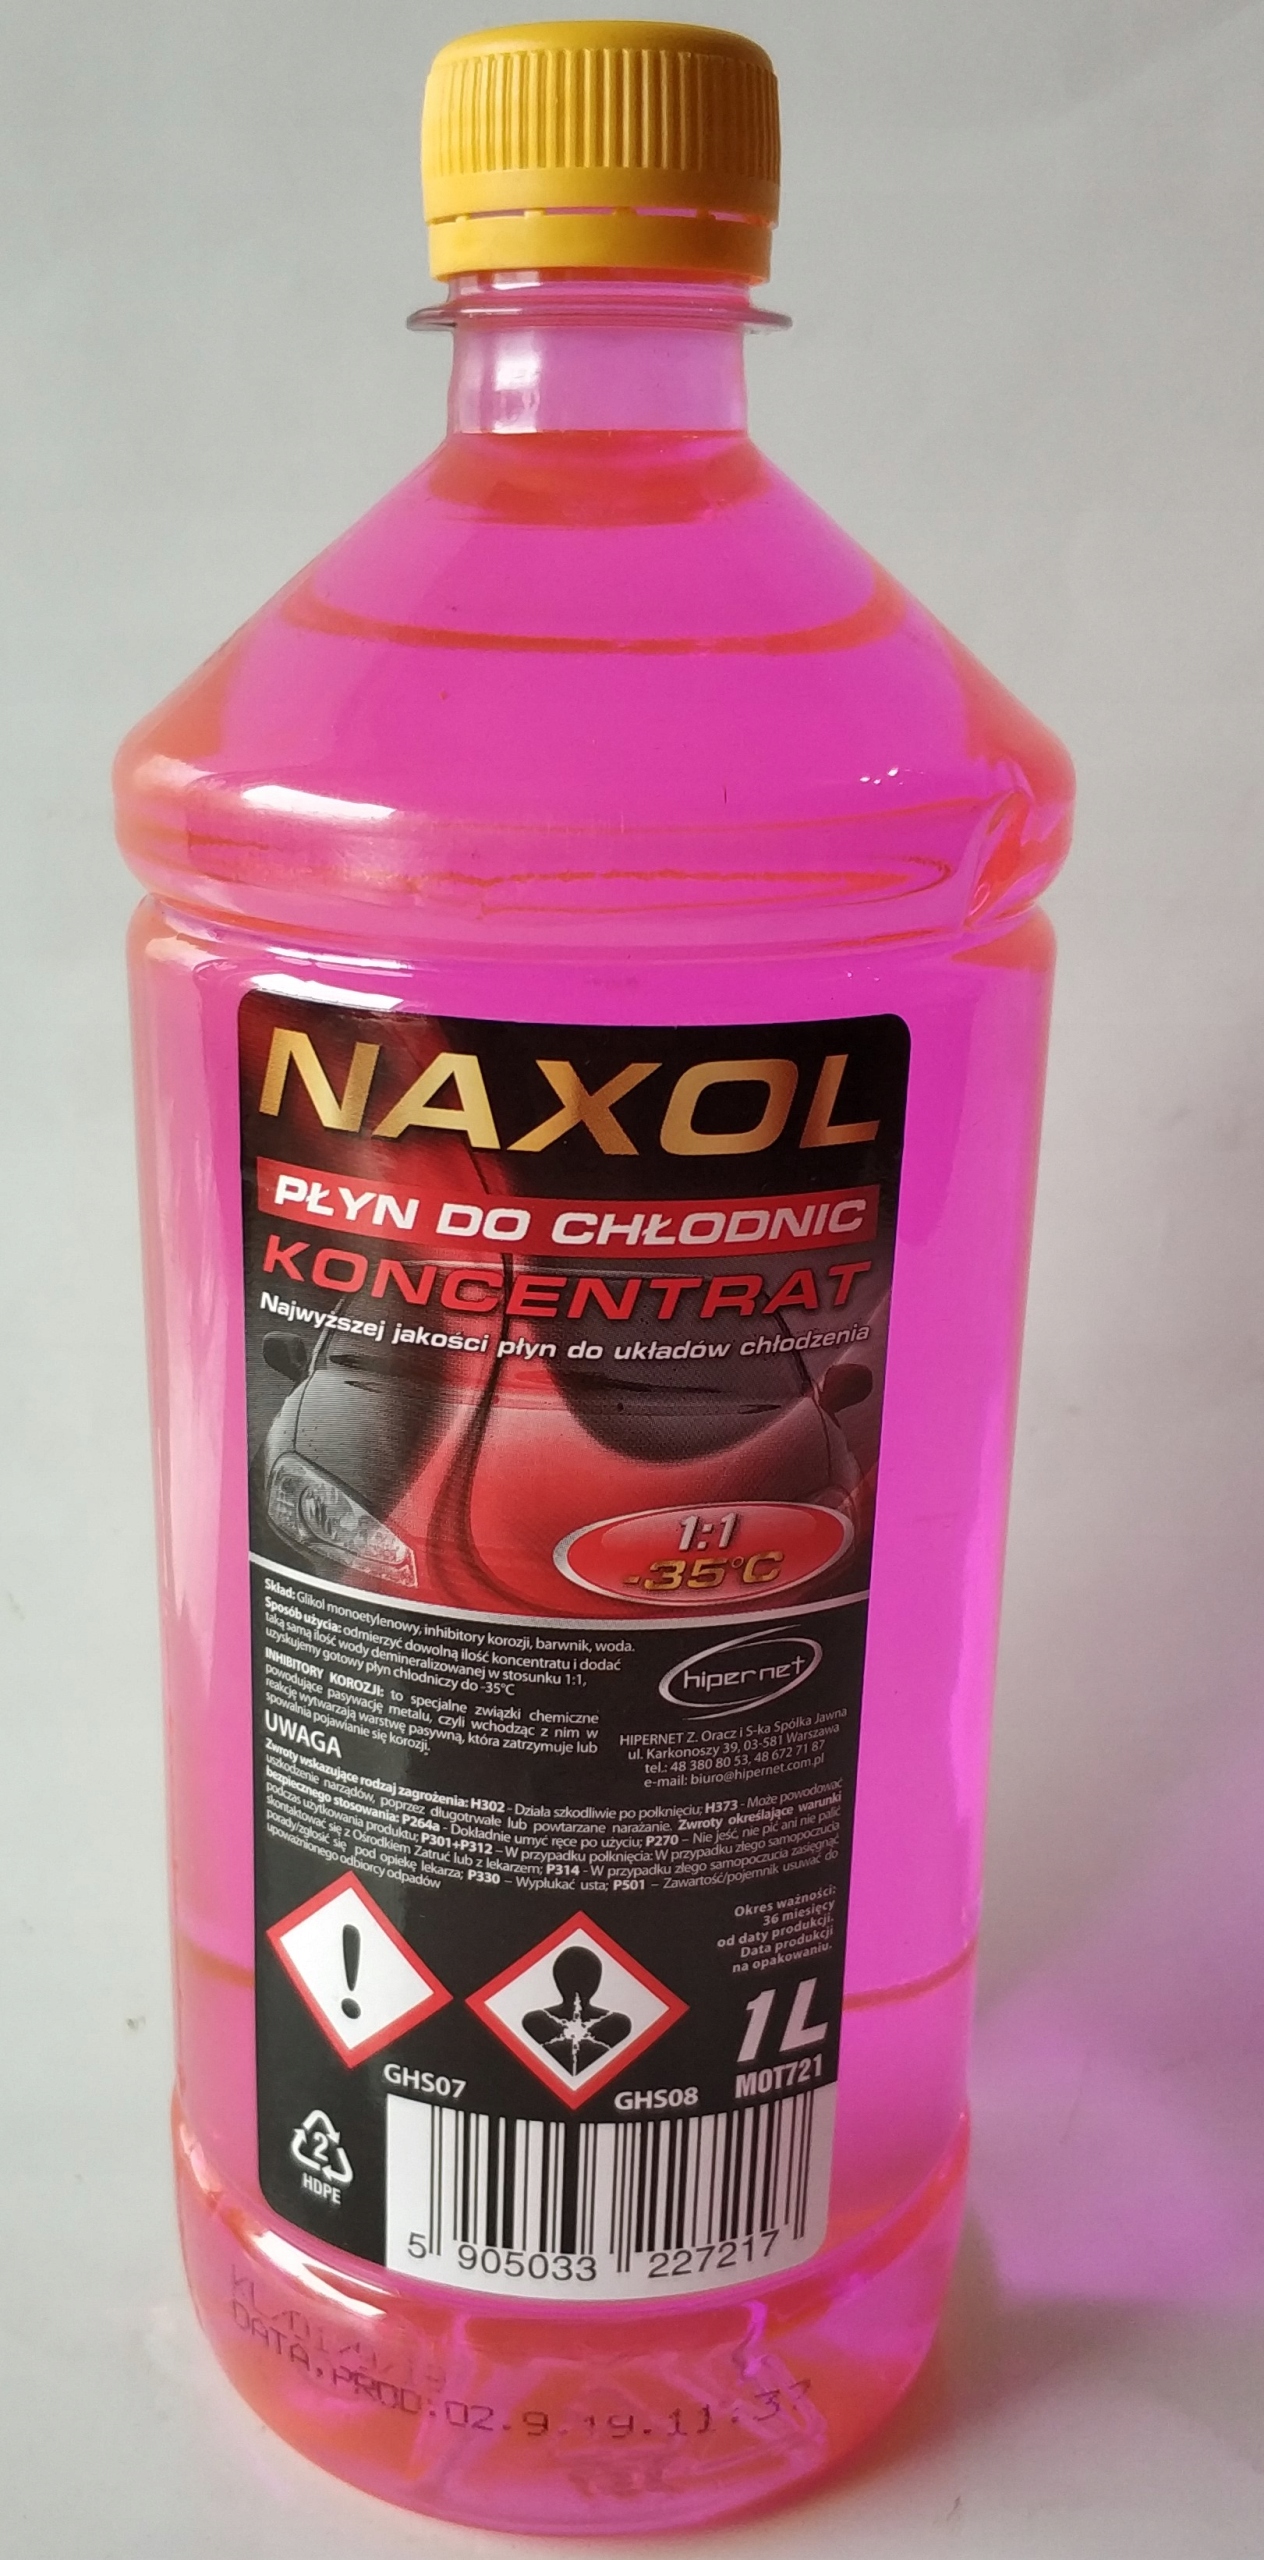 Naxol-Plyn-do-chlodnic-Coolant-1l-koncentrat-1-1-Marka-Naxol.jpeg